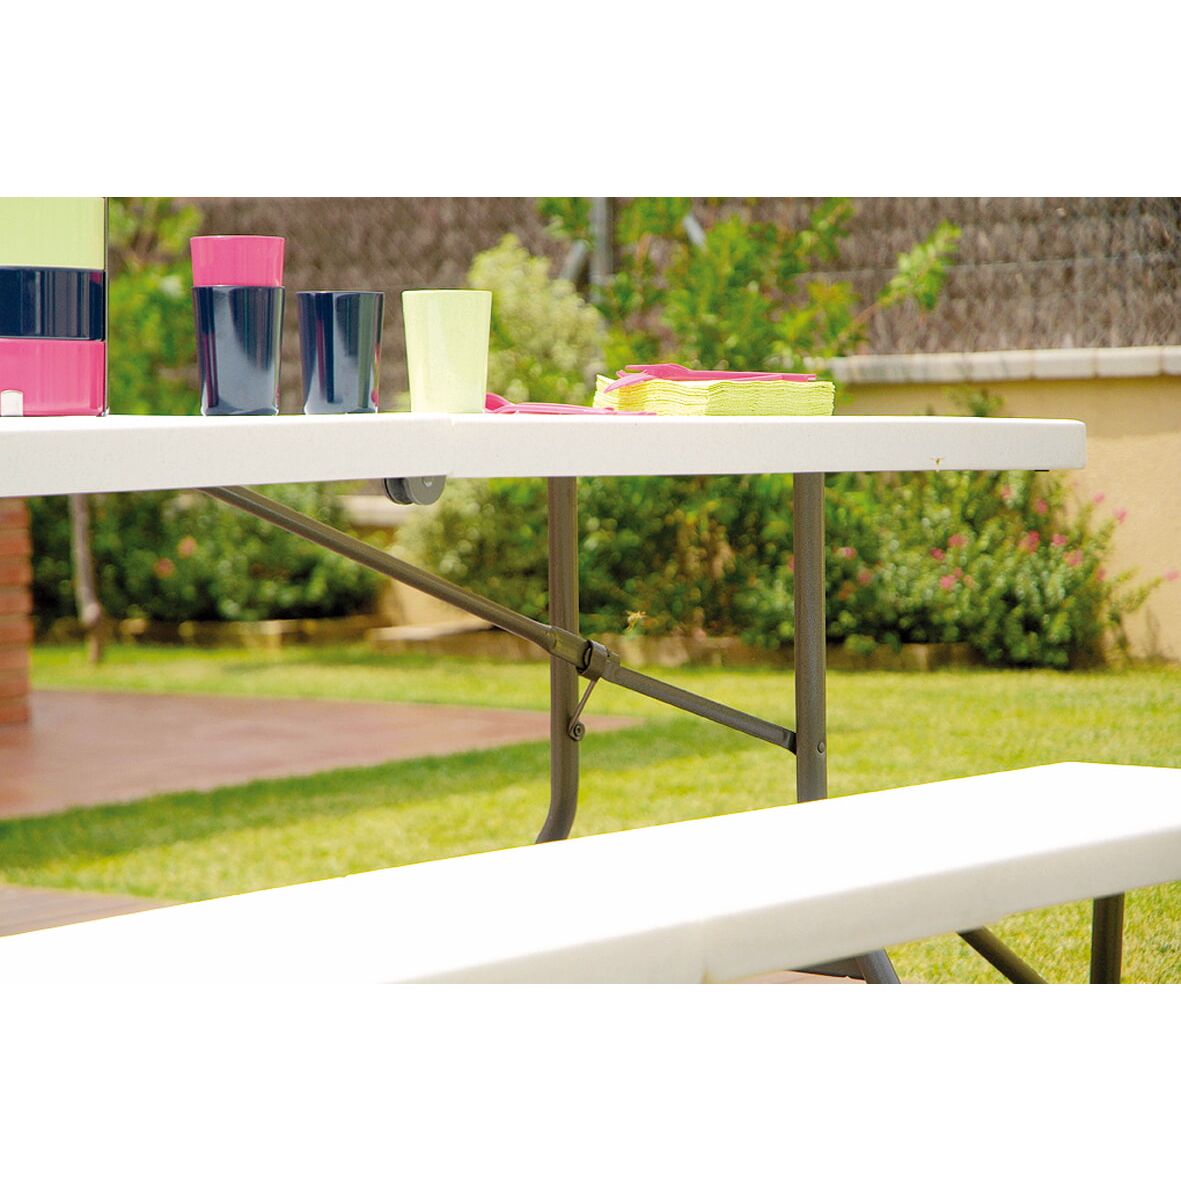 Garbar slim rectangular folding table indoors, outdoors